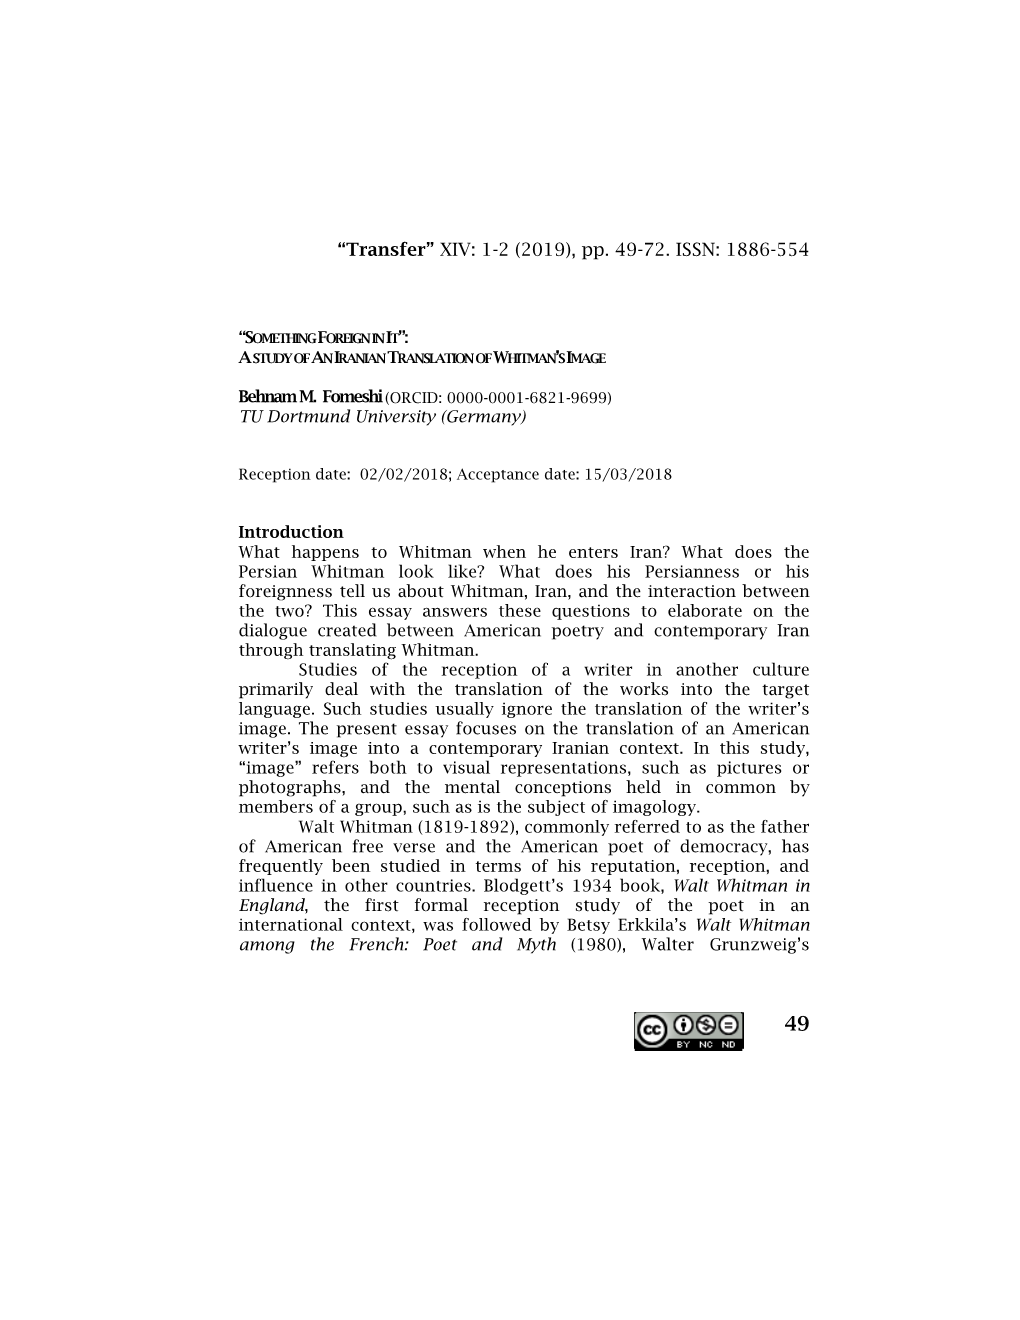 “Transfer” XIV: 1-2 (2019), Pp. 49-72. ISSN: 1886-554